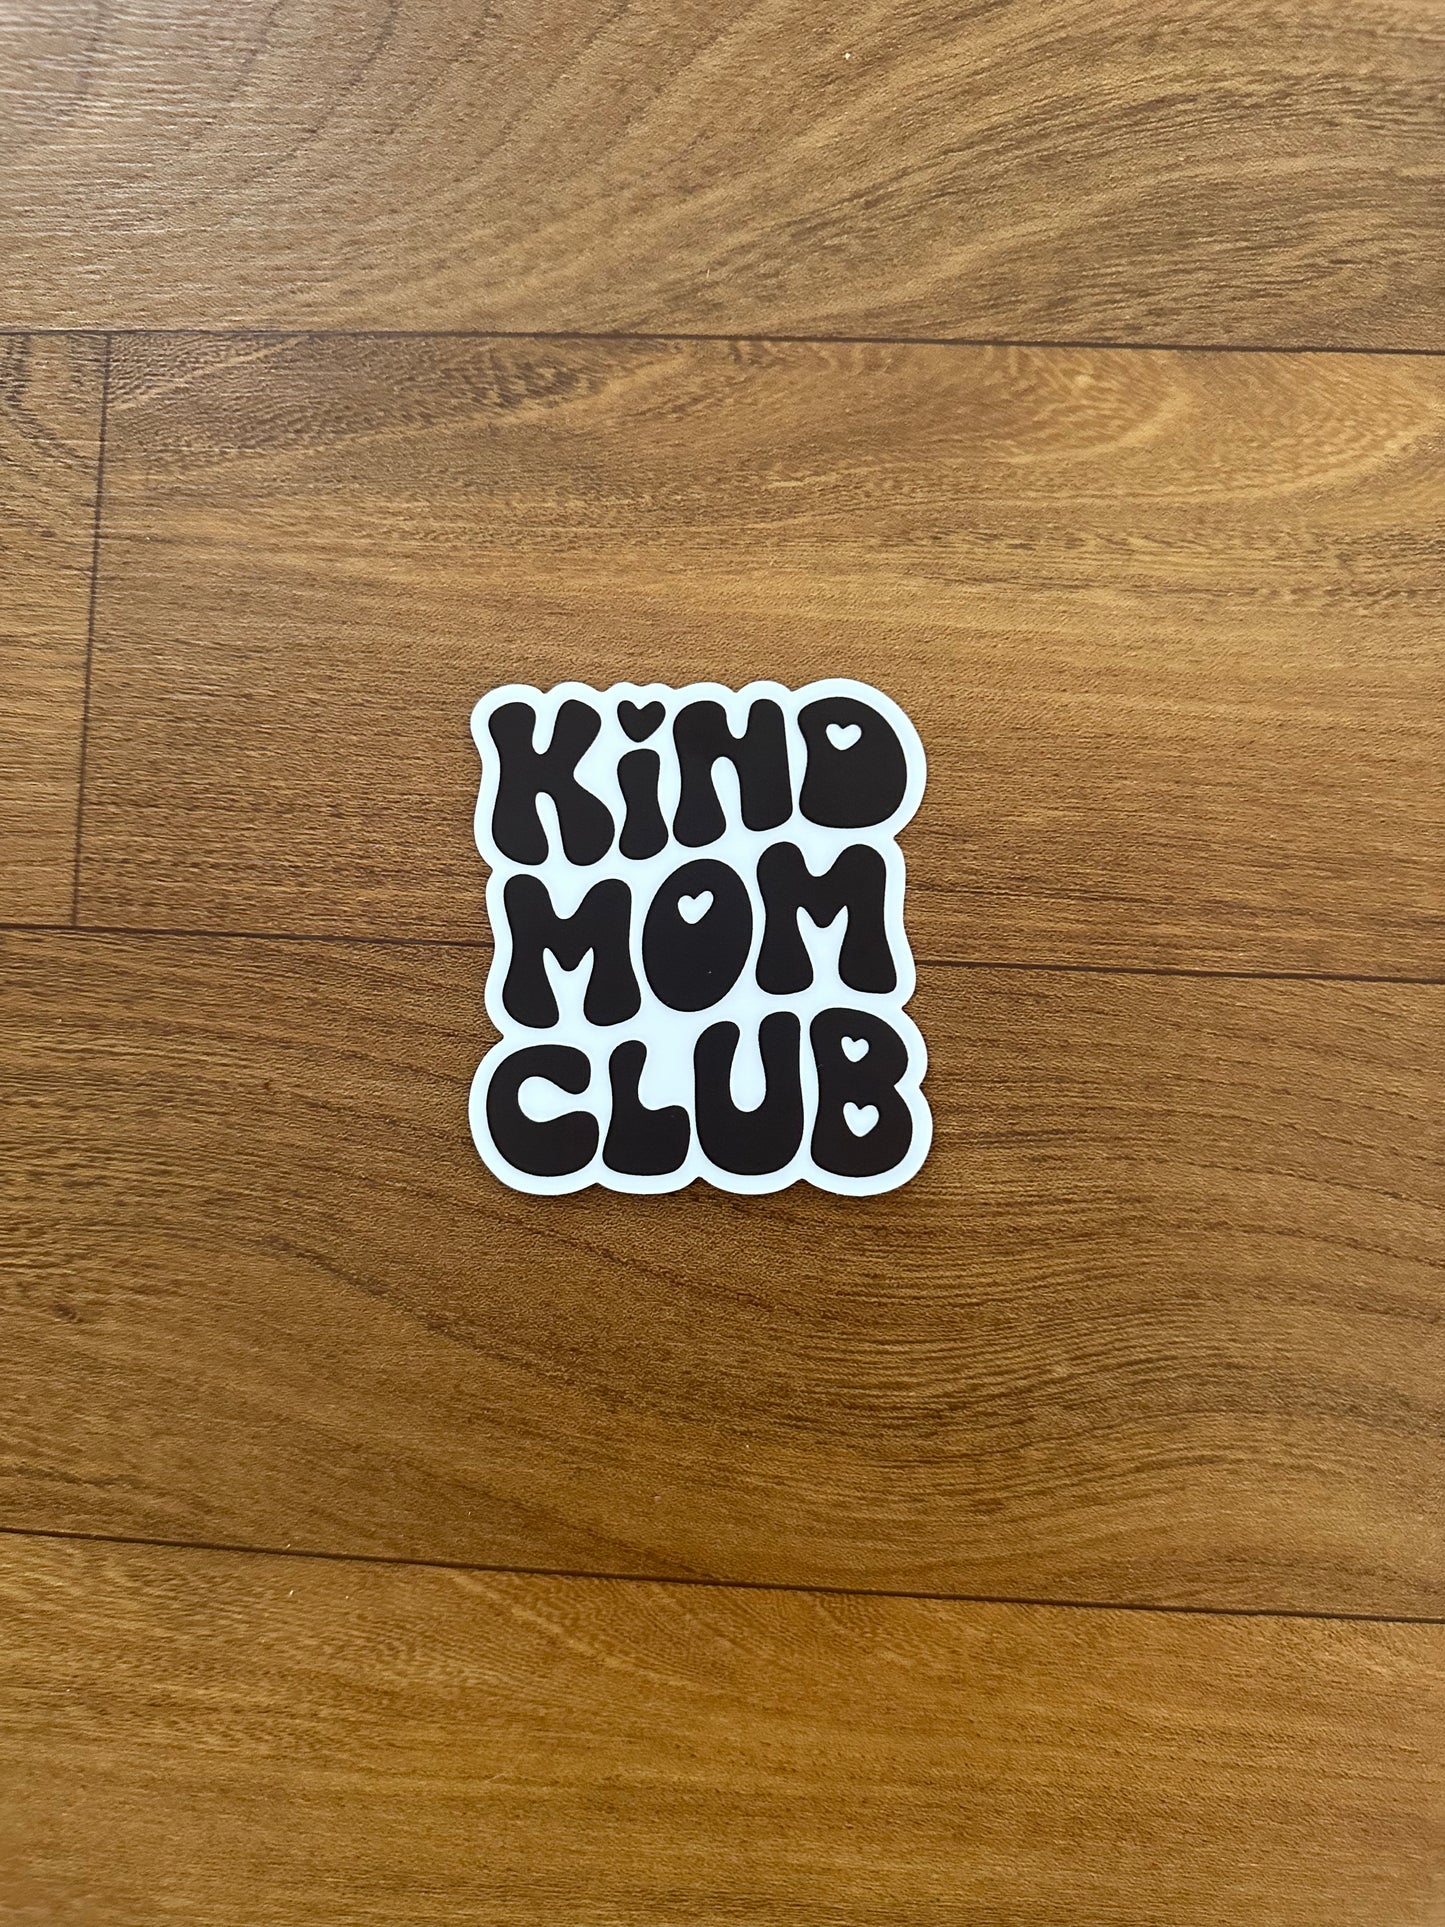 Kind Mom Club Sticker